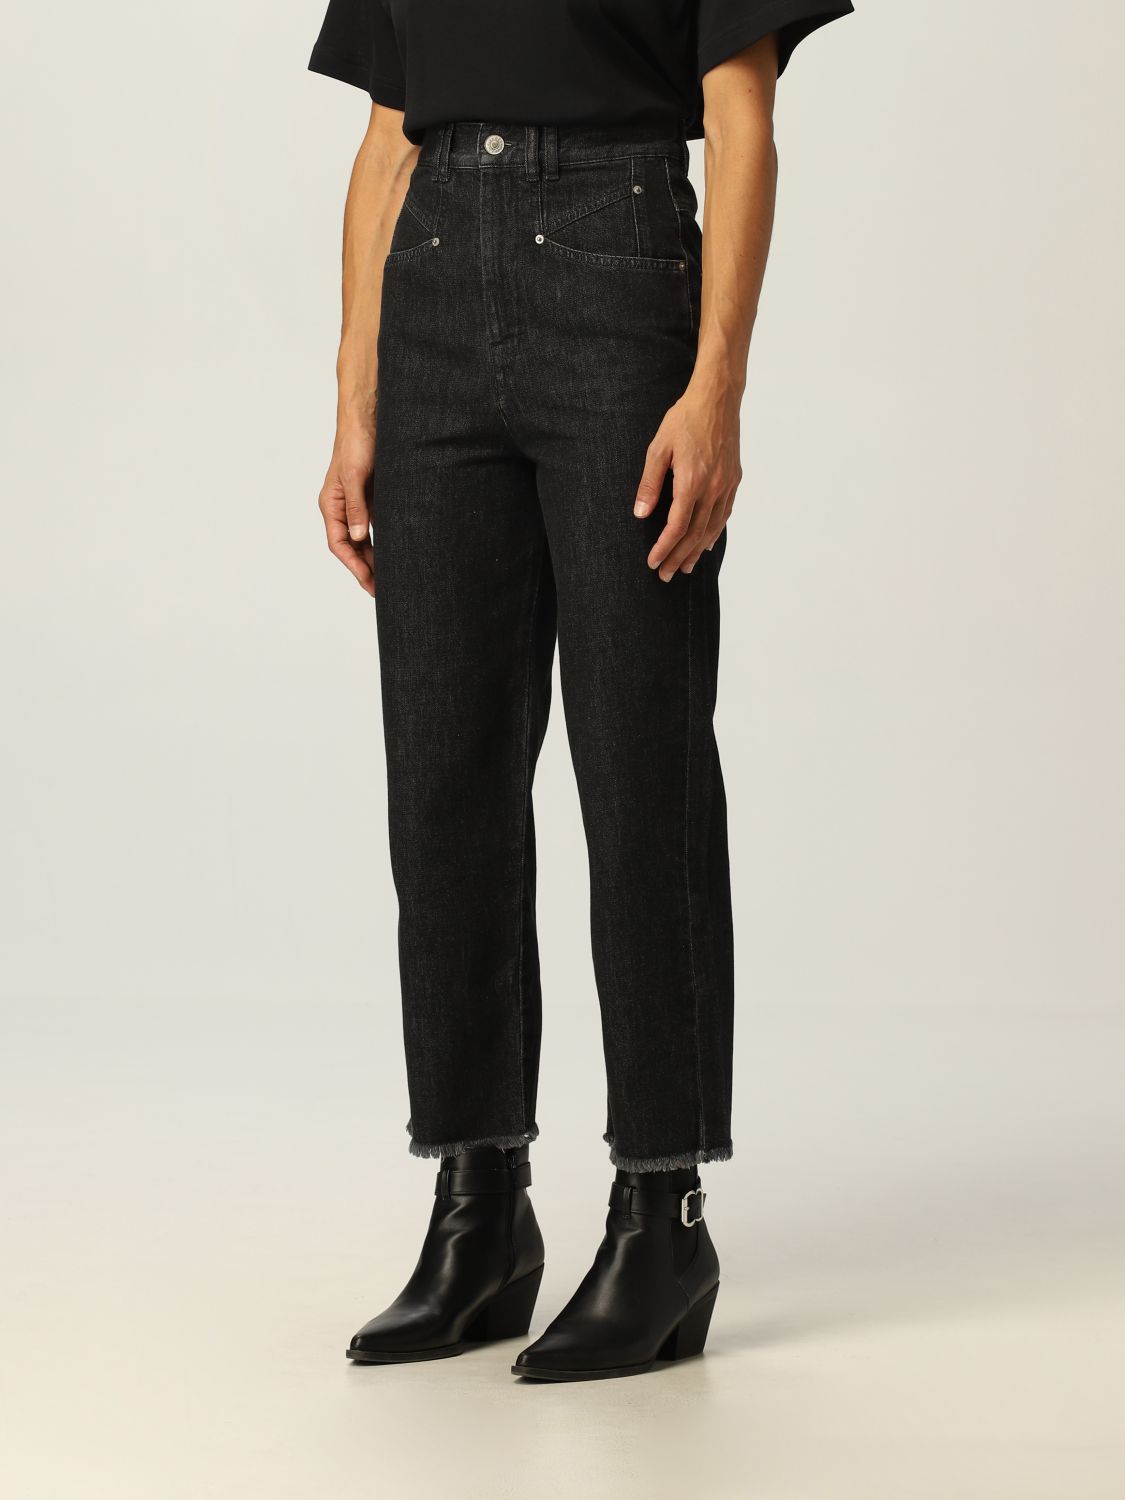 ISABEL MARANT: Pants women | Jeans Isabel Marant Women Black | Jeans ...